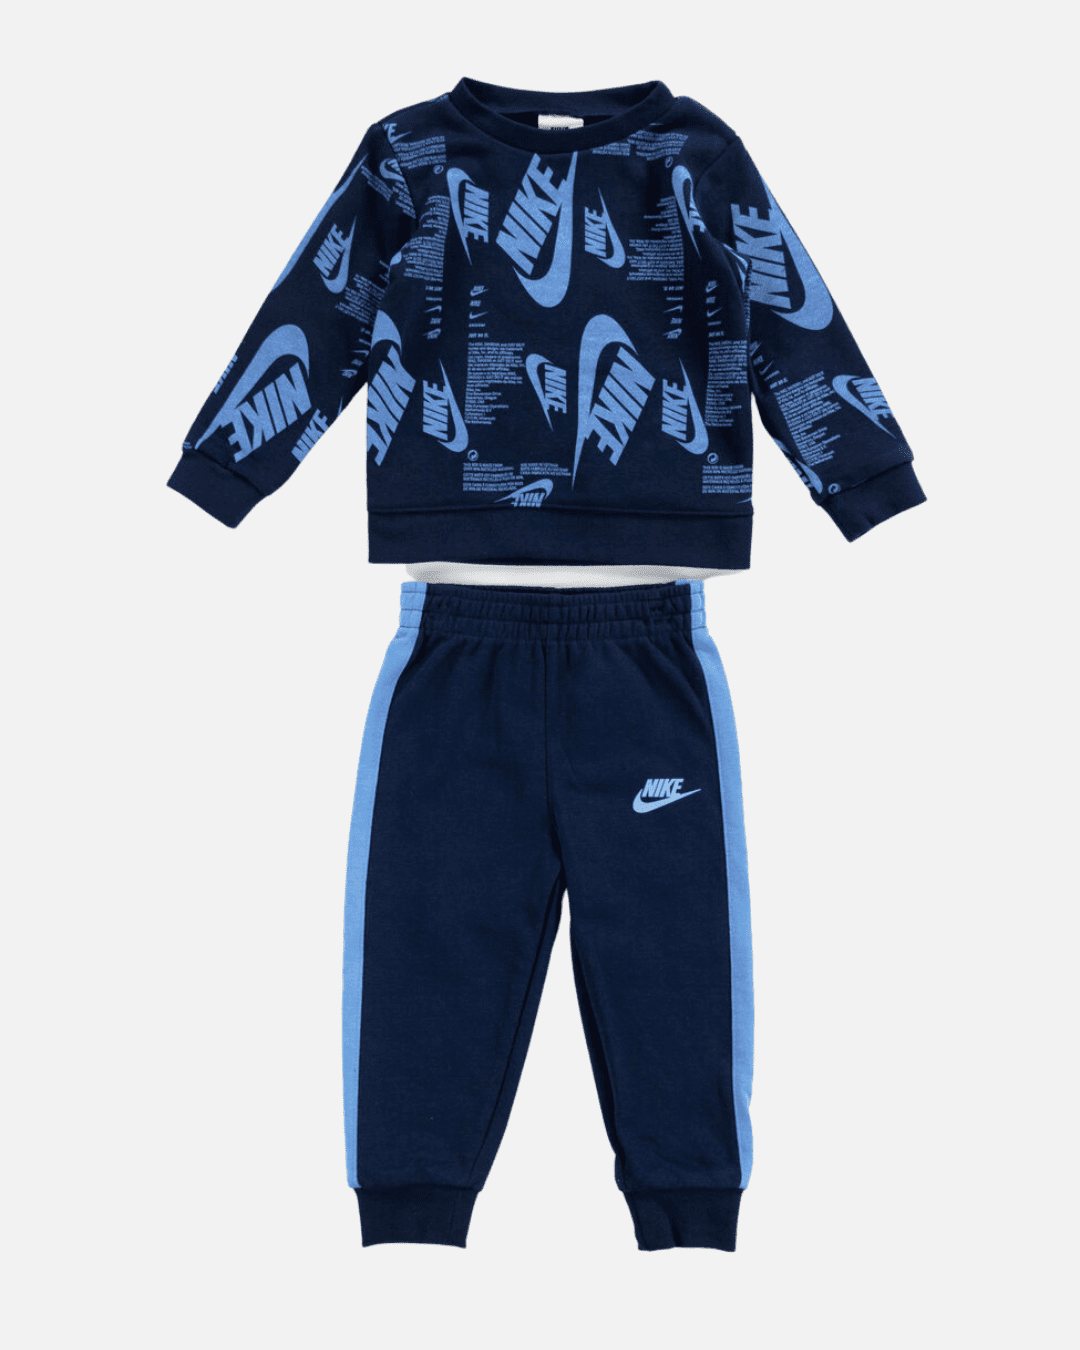 Chándal Nike Futura Taping para bebé - Azul